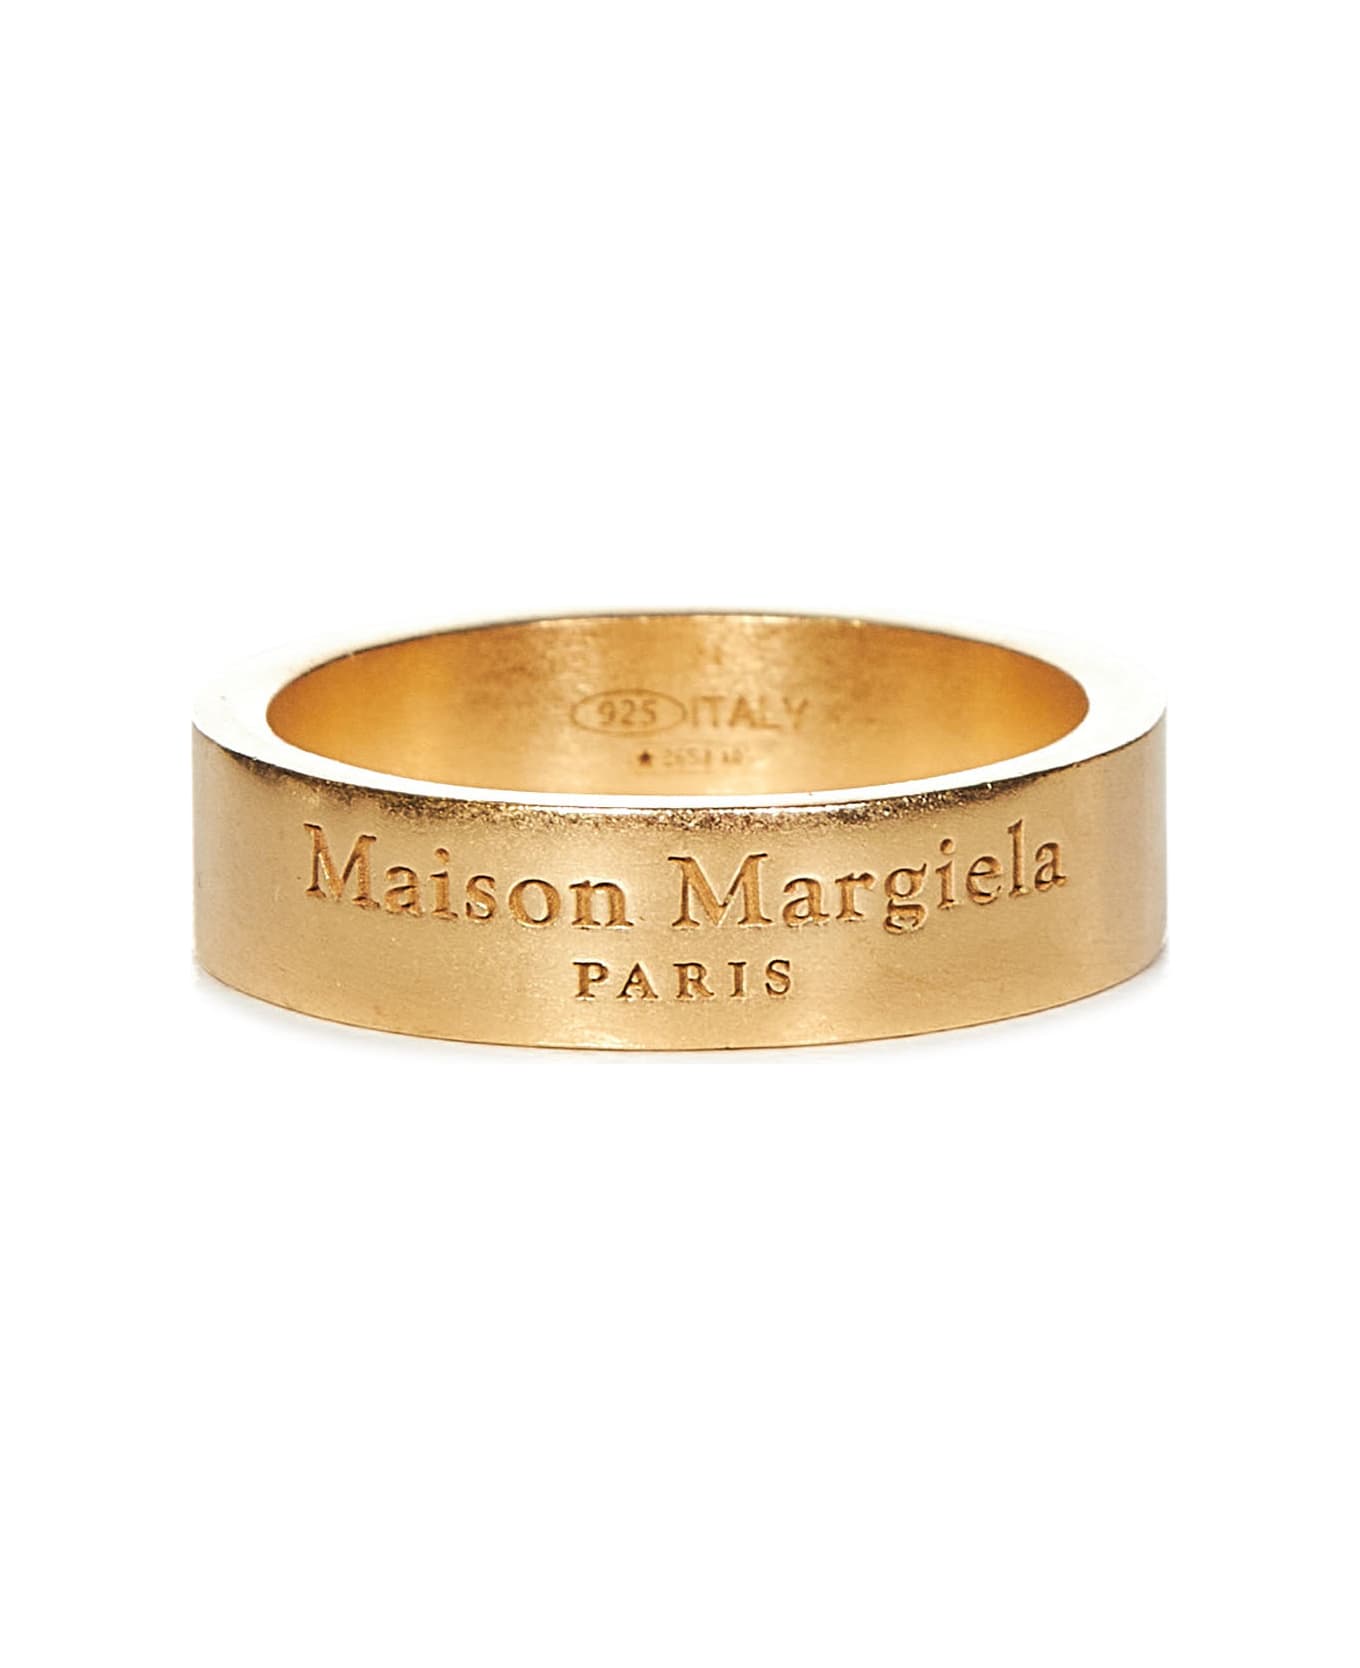 Maison Margiela Logo Ring - YELLOW GOLD PLATING BURATTATO